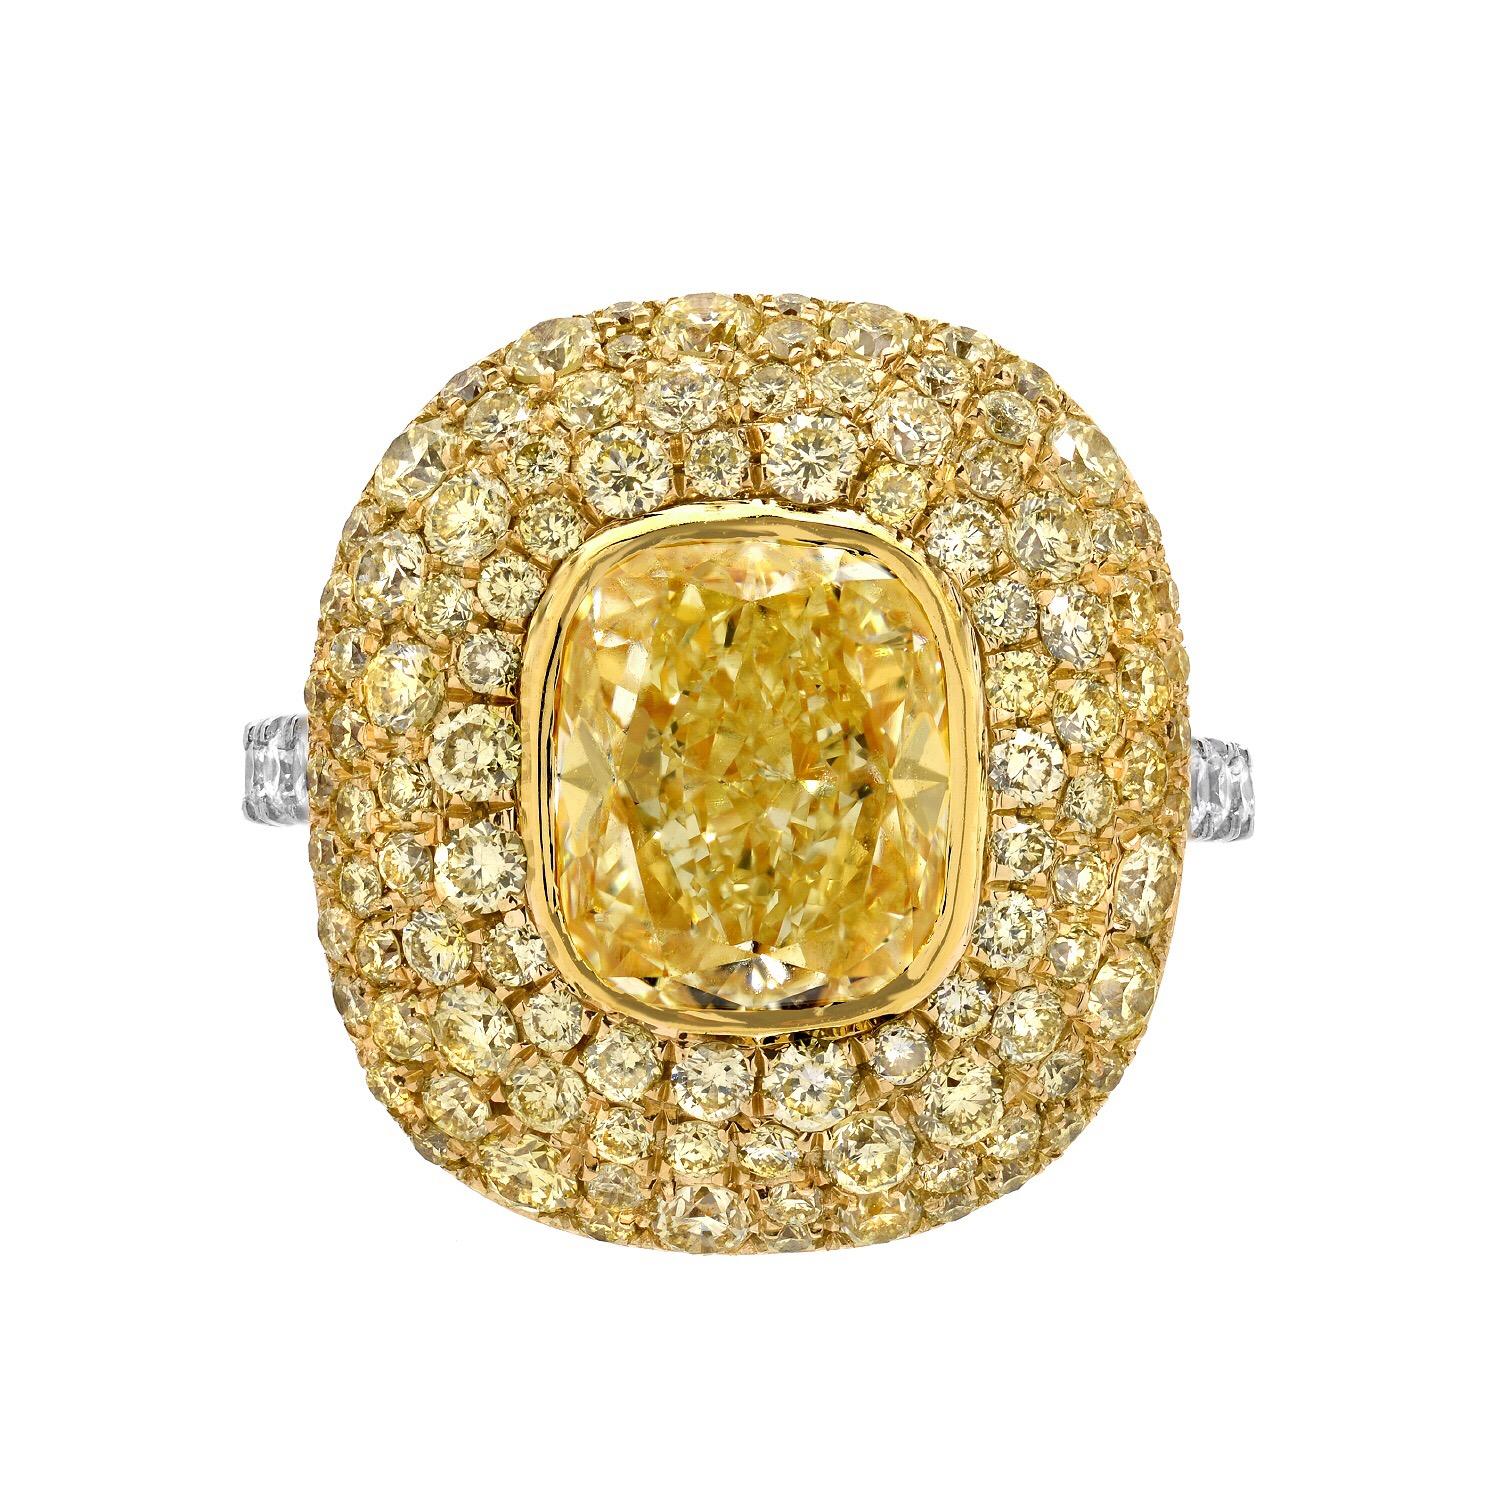 Fancy Light Yellow Diamond Ring 3.01 Carat GIA Certified (Moderne)